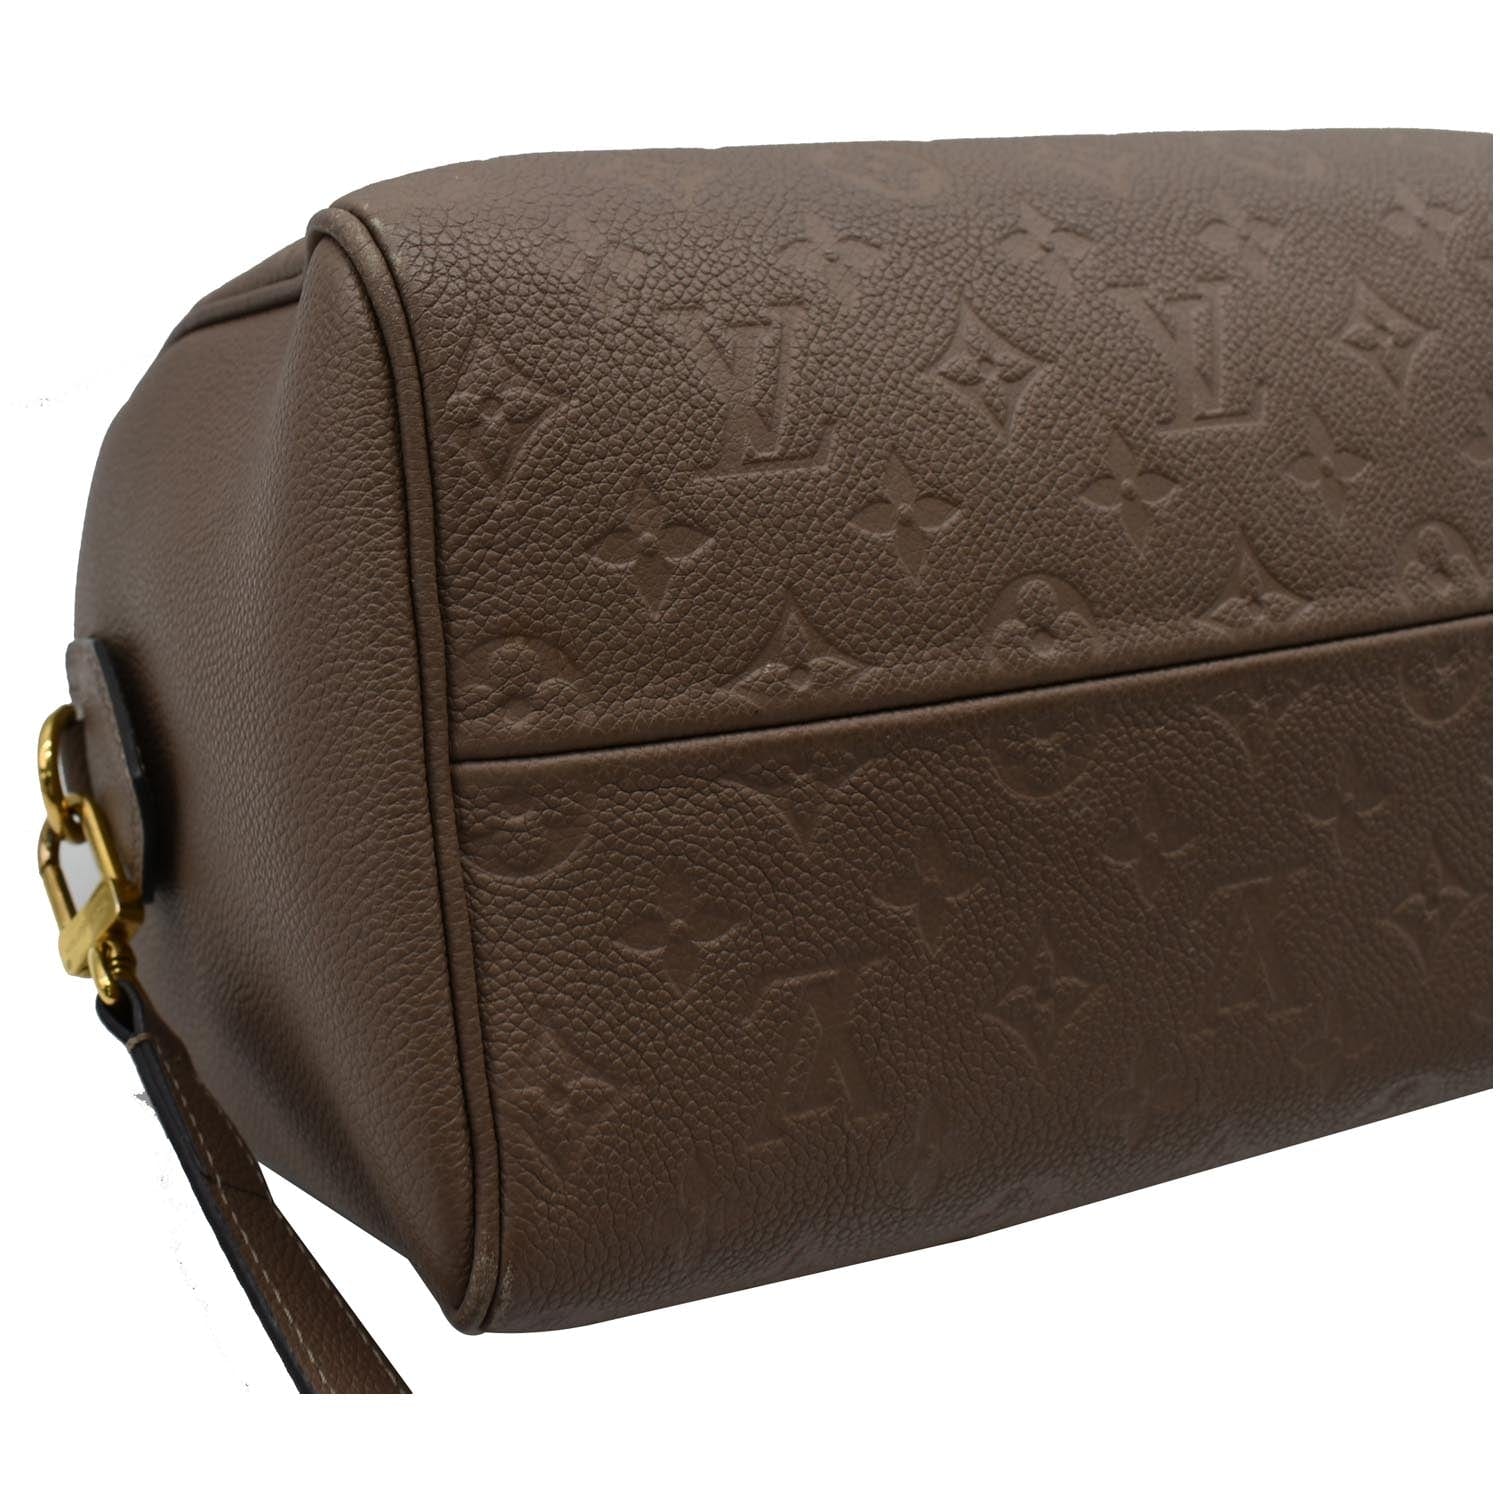 Speedy Bandoulière 25 Top handle bag in Monogram Empreinte leather, Gold  Hardware